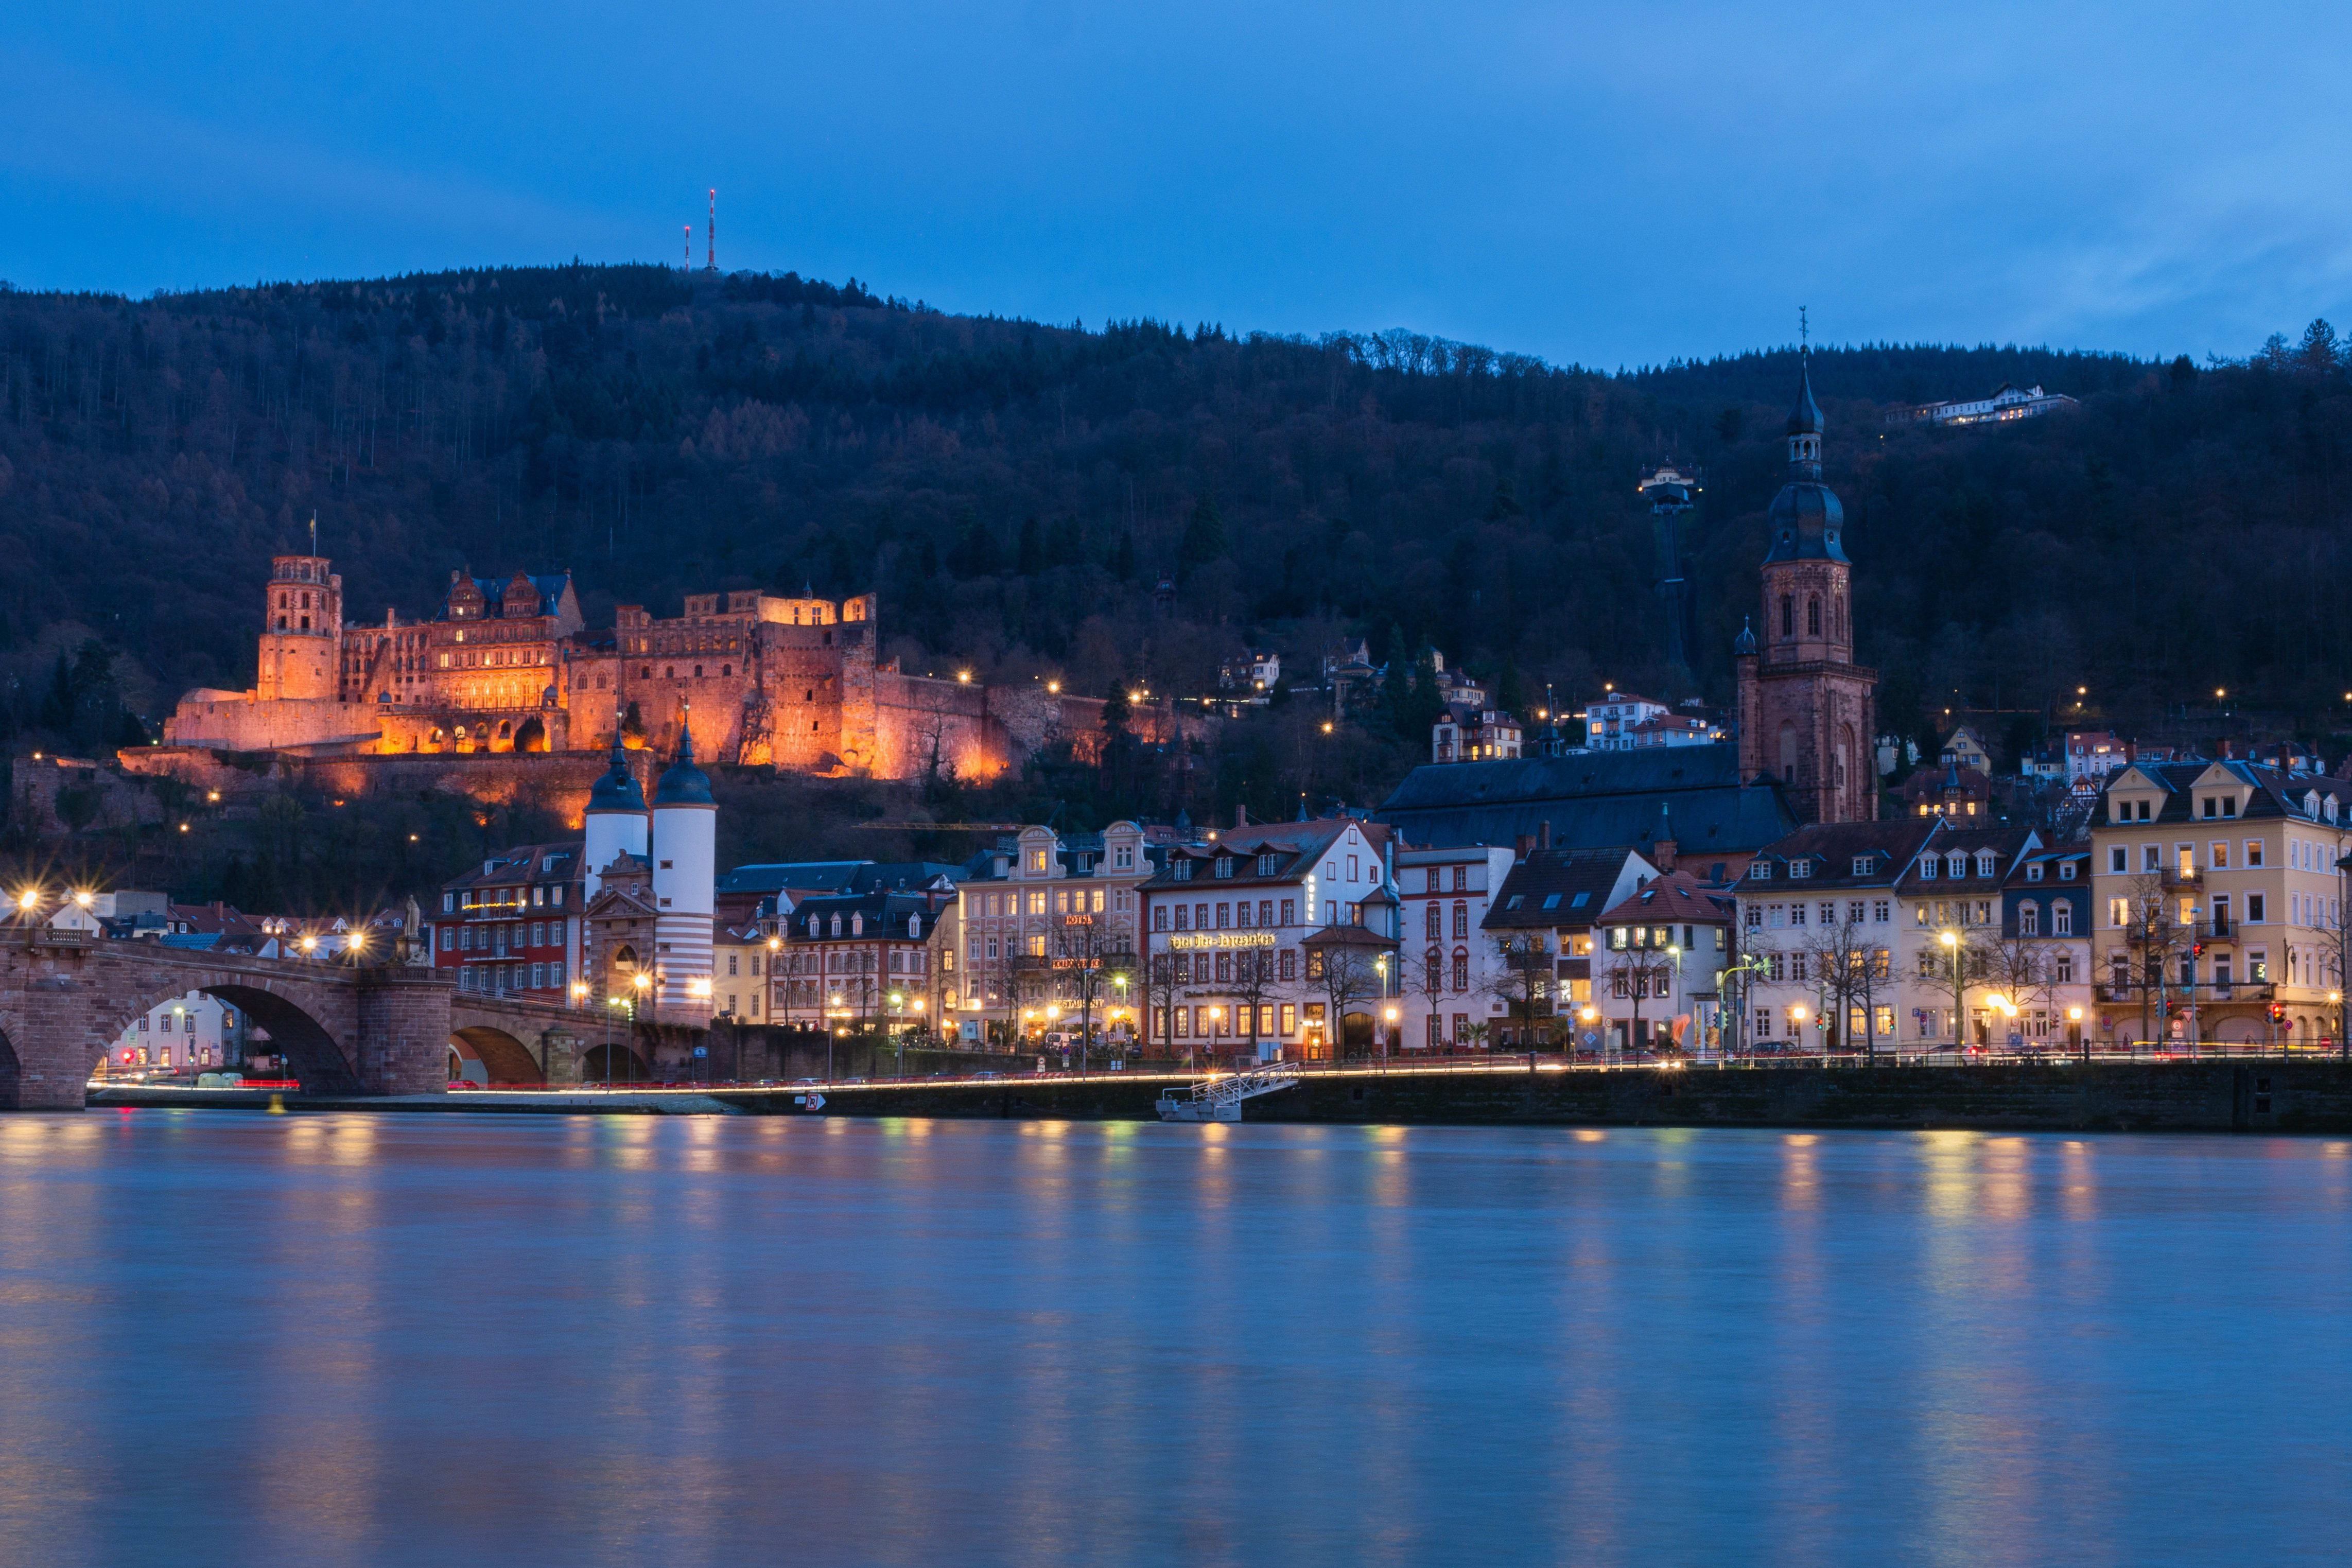 Das wunderschöne Heidelberger Schloss